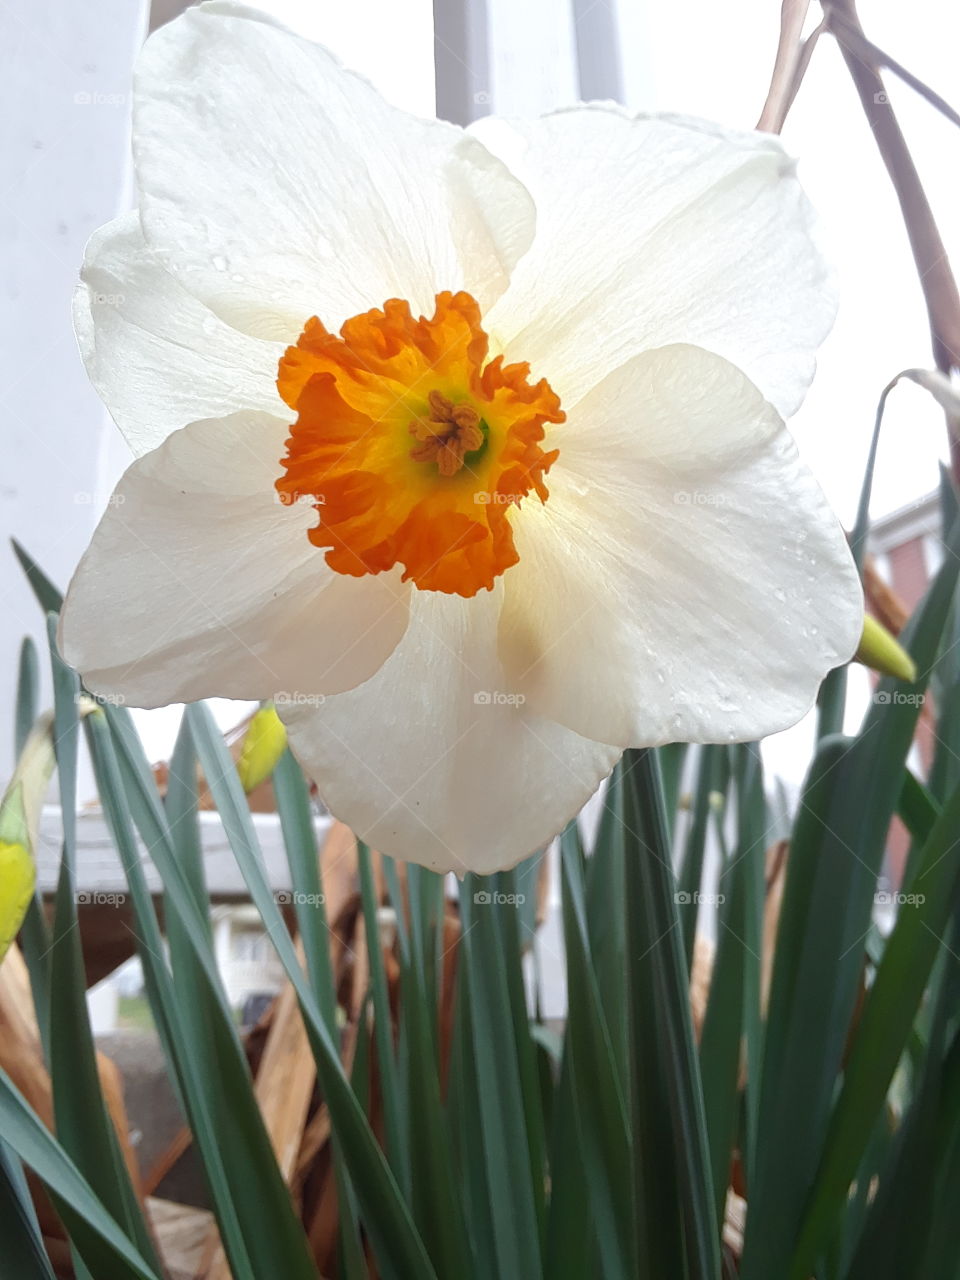 spring daffodil white with bright orange centr